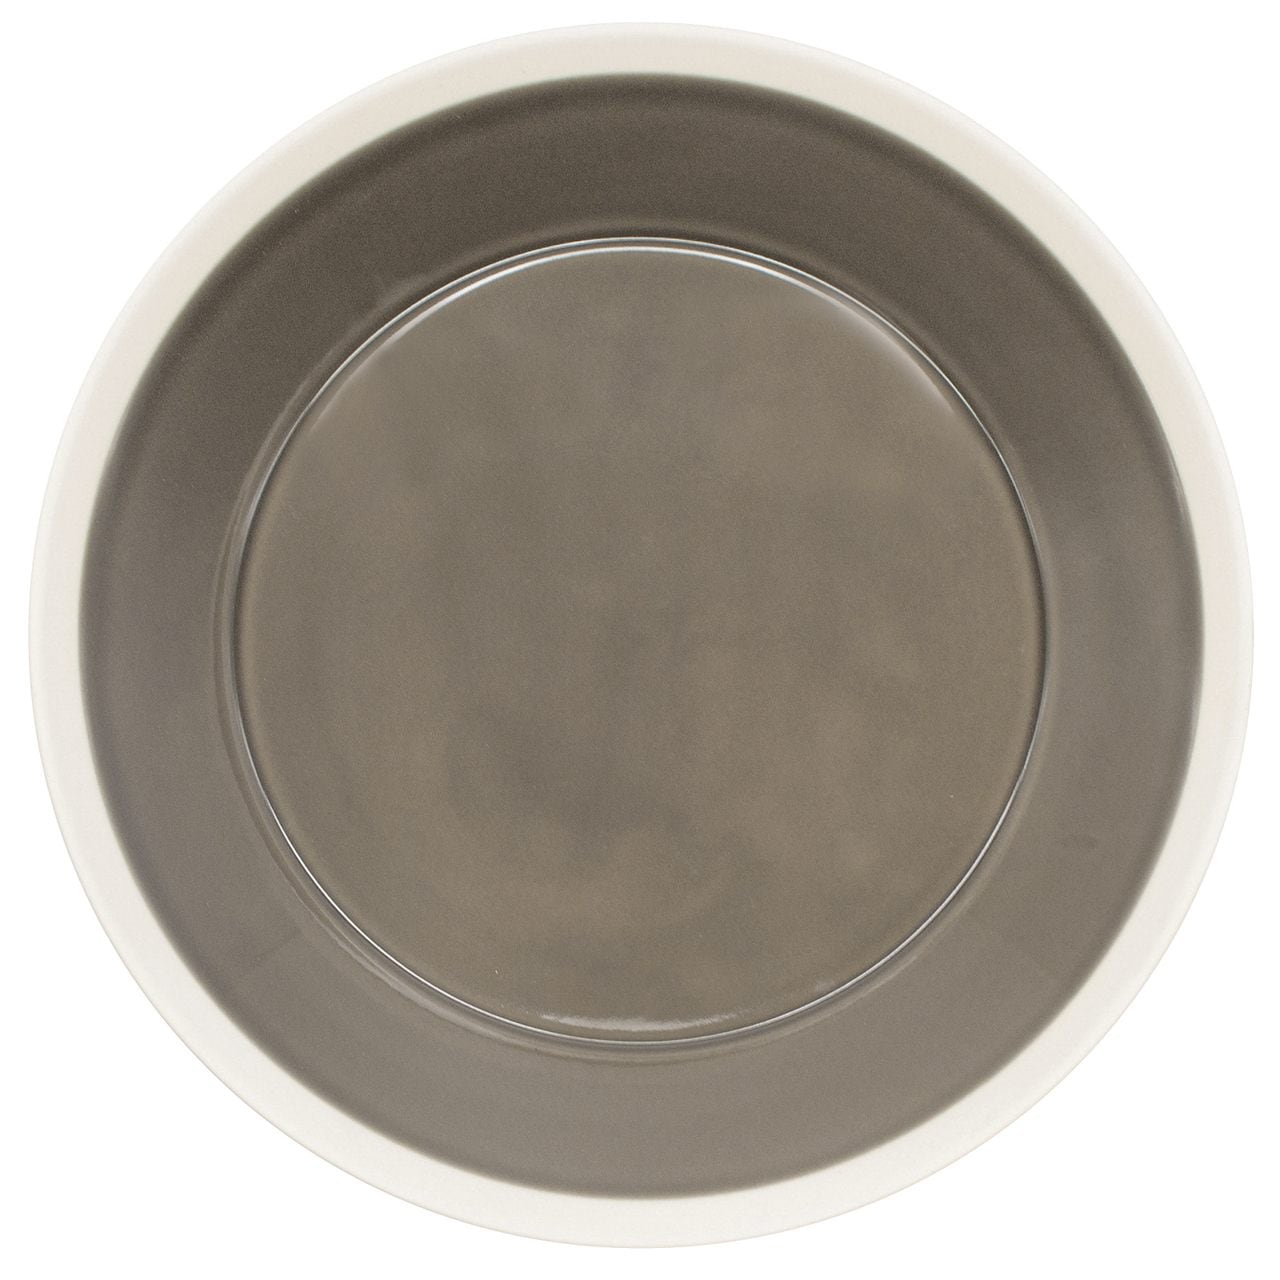 yumiko iihoshi porcelain（ユミコイイホシポーセリン）×木村硝子店 dishes 230 plate (fawn brown)  プレート 皿 23cm 日本製 255107